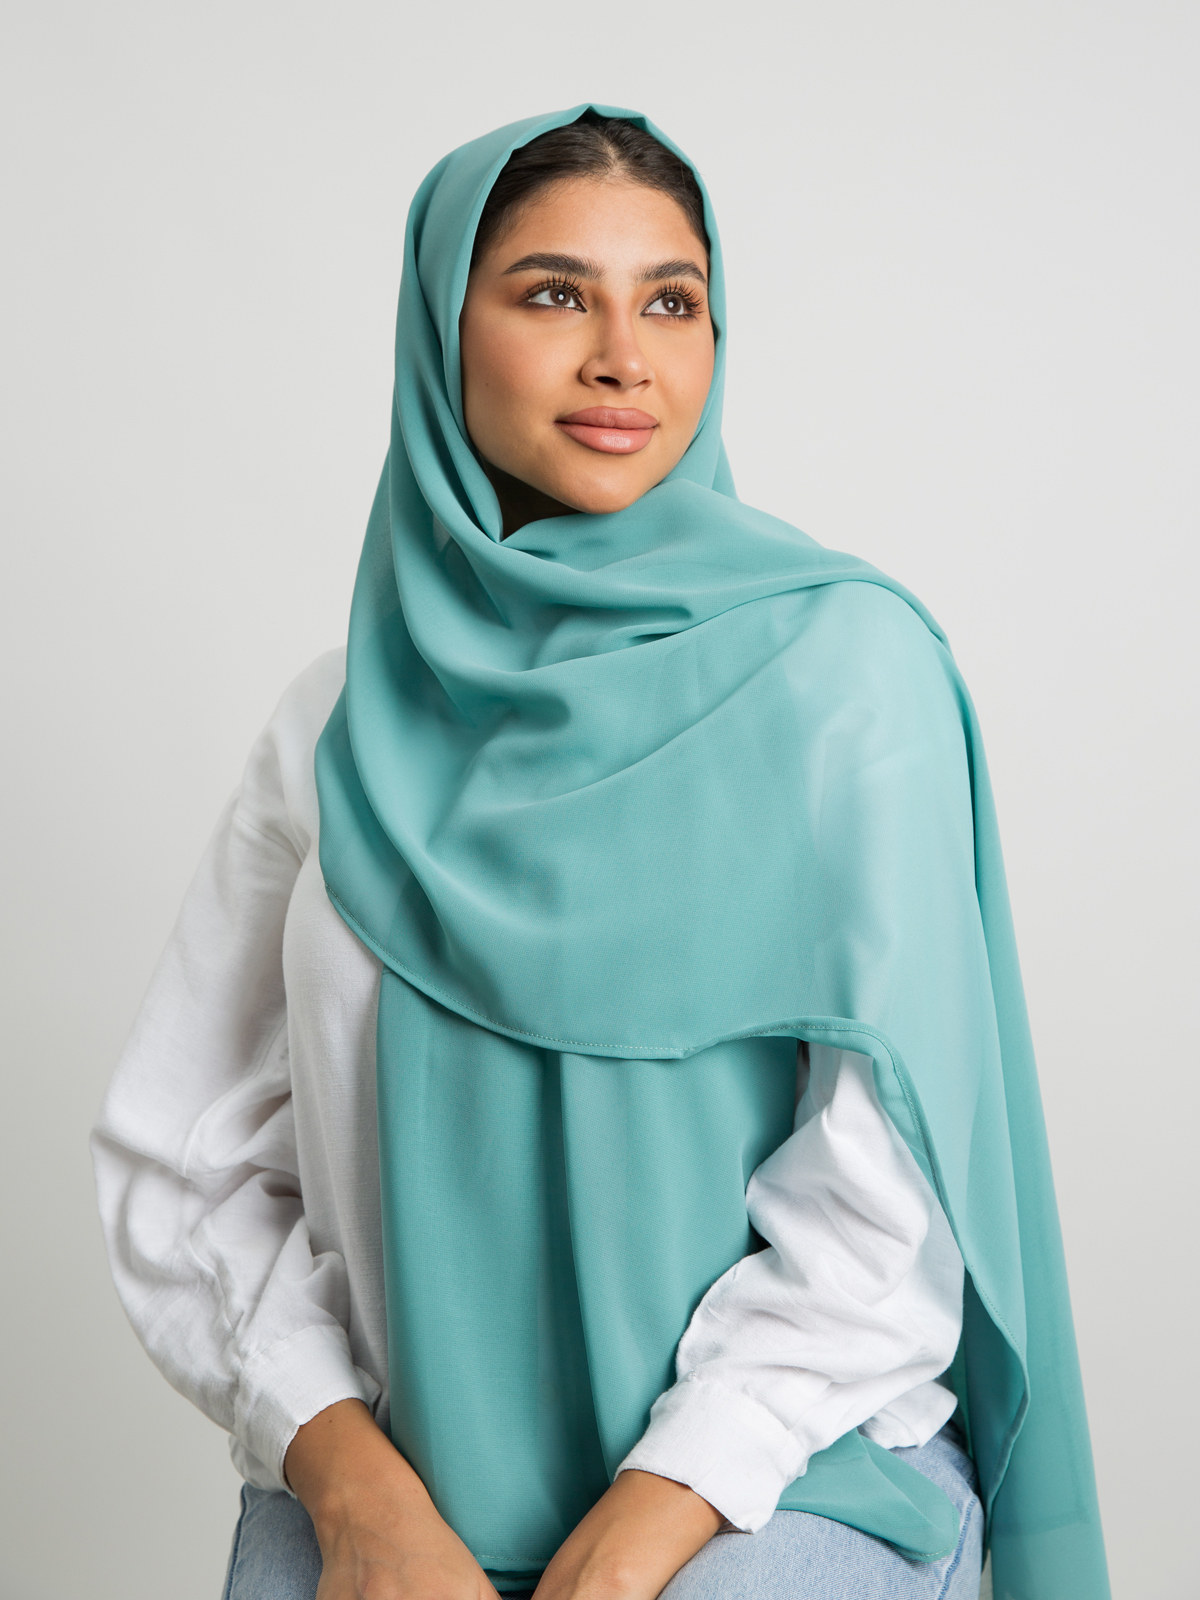 Tiffany plain light chiffon tarha by kaafmeem hijab for daily wear available in multiple colors